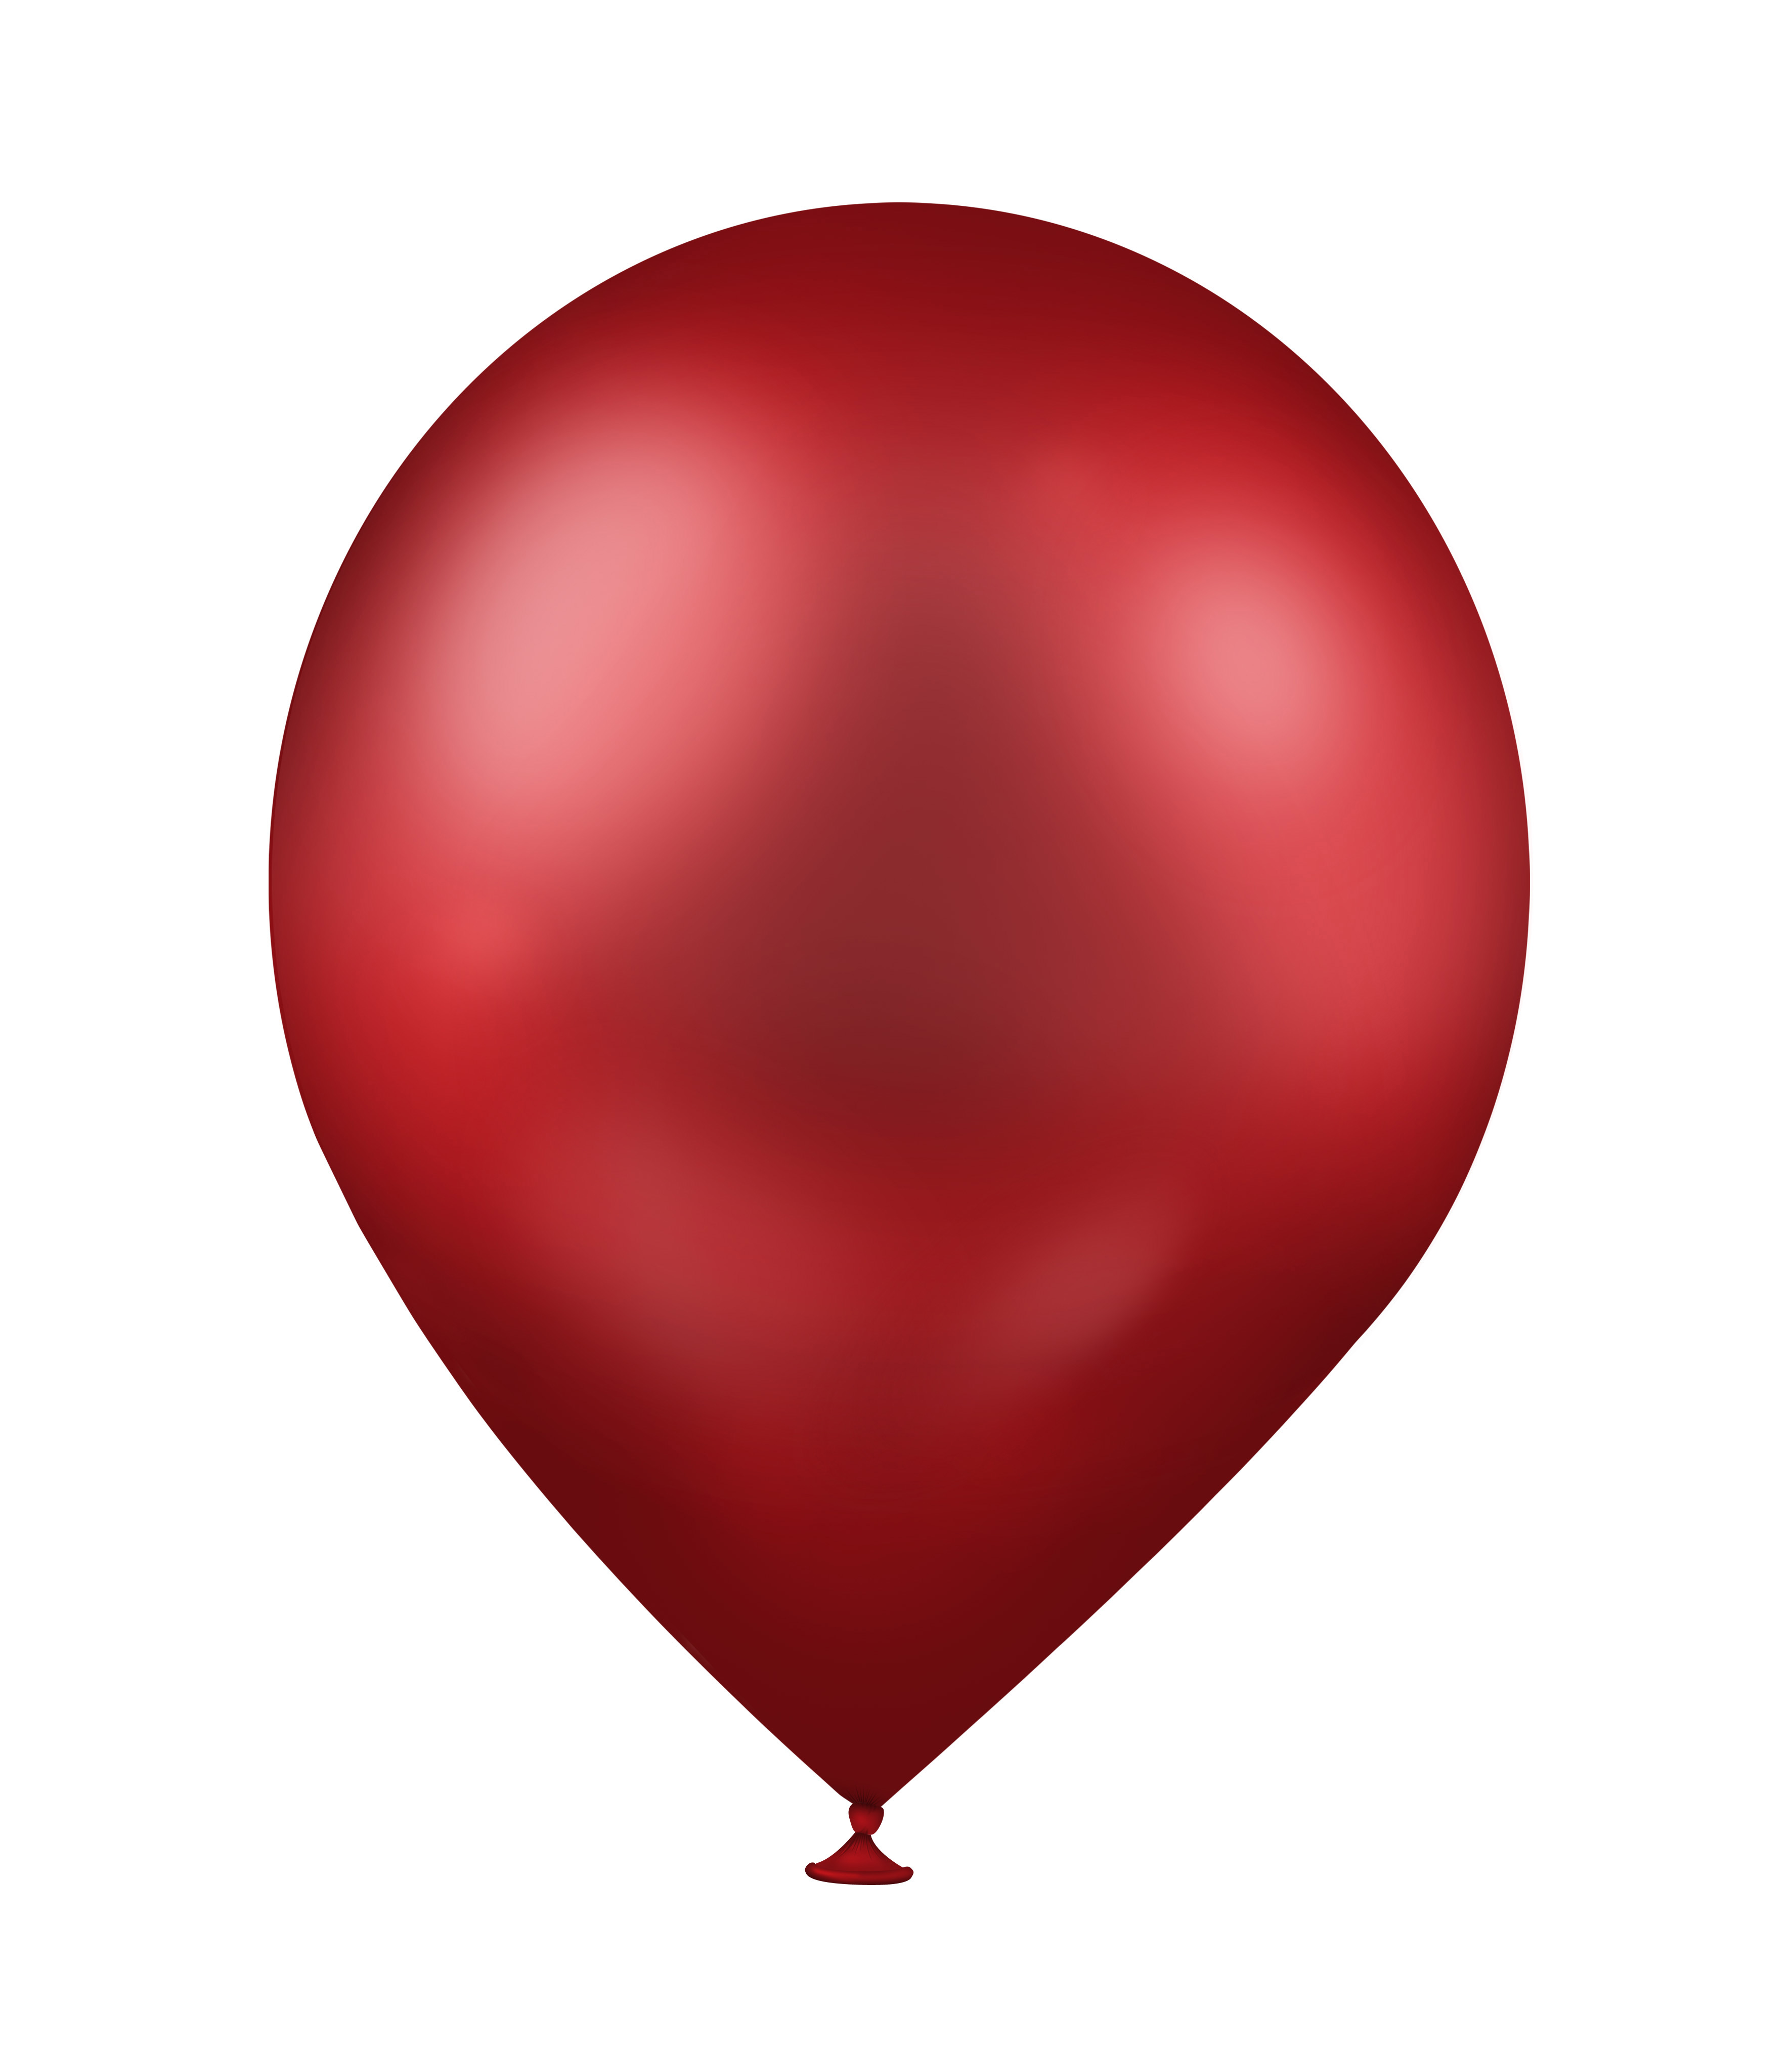 Balloon image - vector clip art online, royalty free & public domain